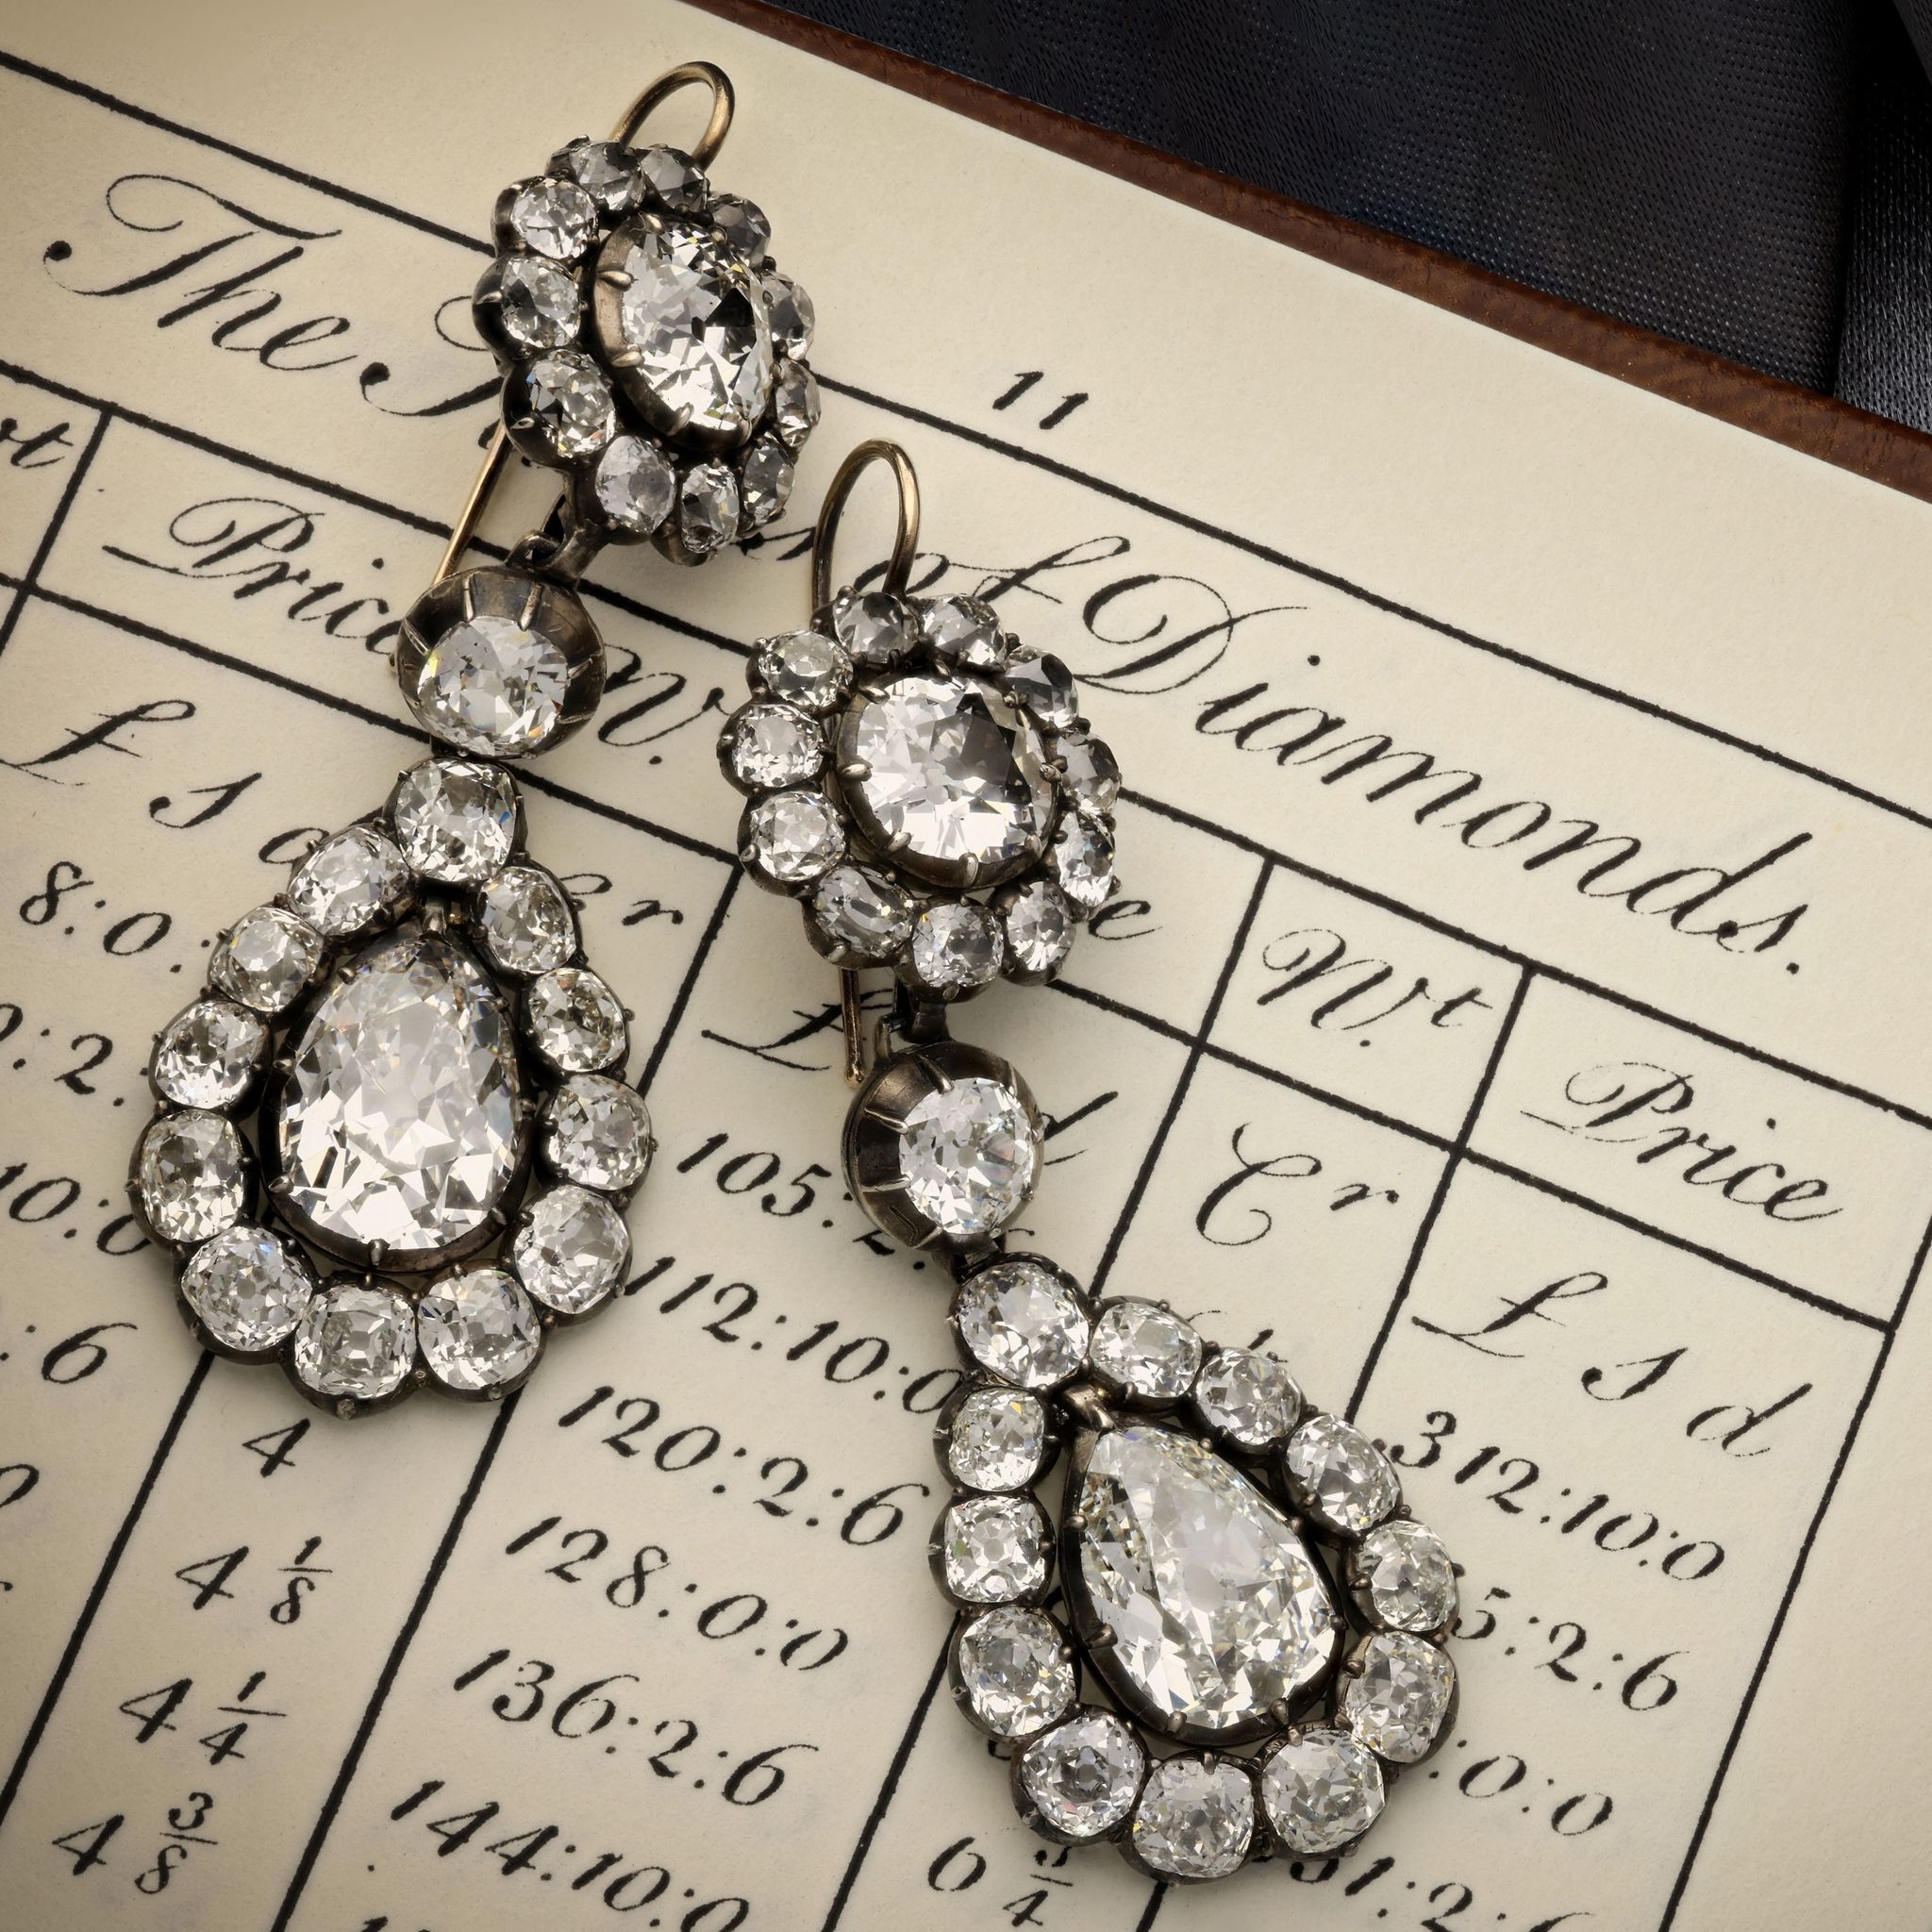 Antique earrings from Hancocks